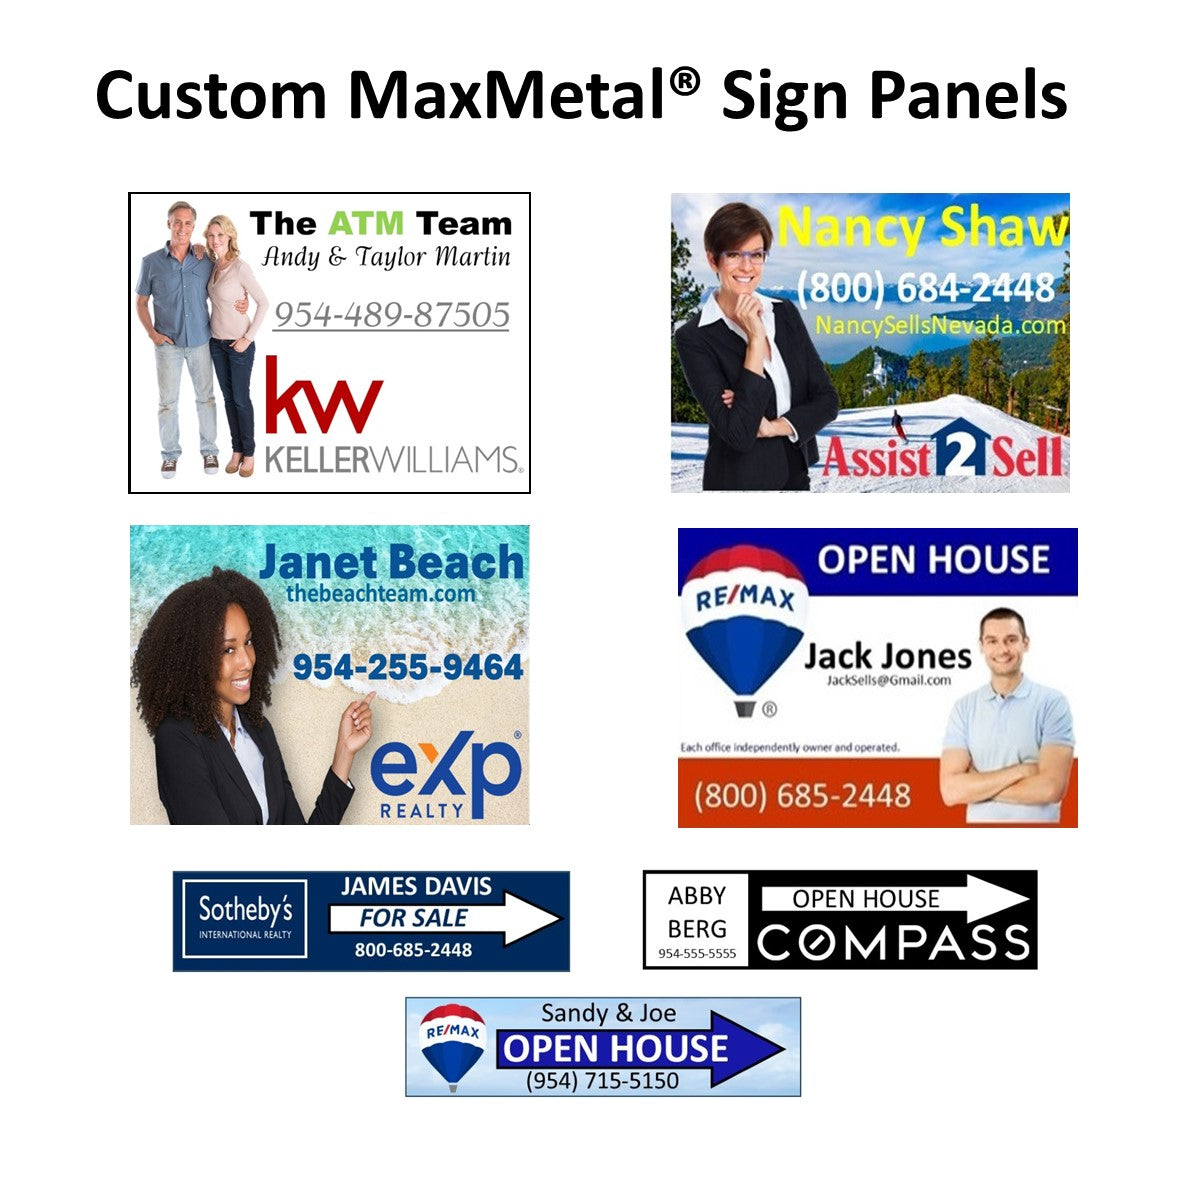 MaxMetal® Sign Panels